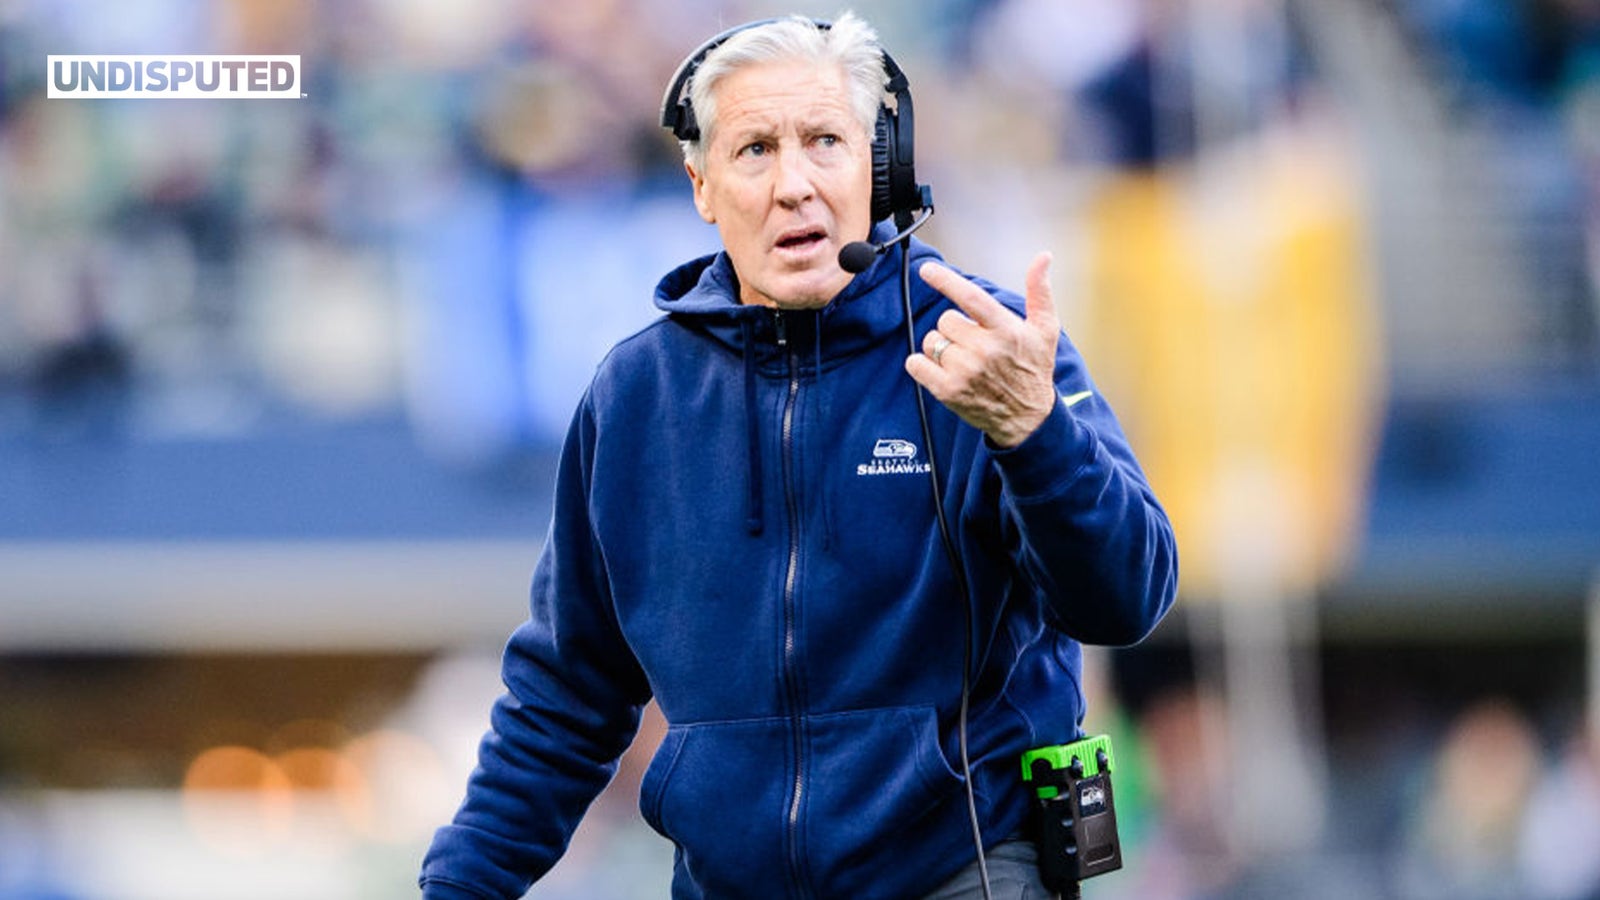 Pete Carroll out as Seahawks head coach, will remain as a team advisor